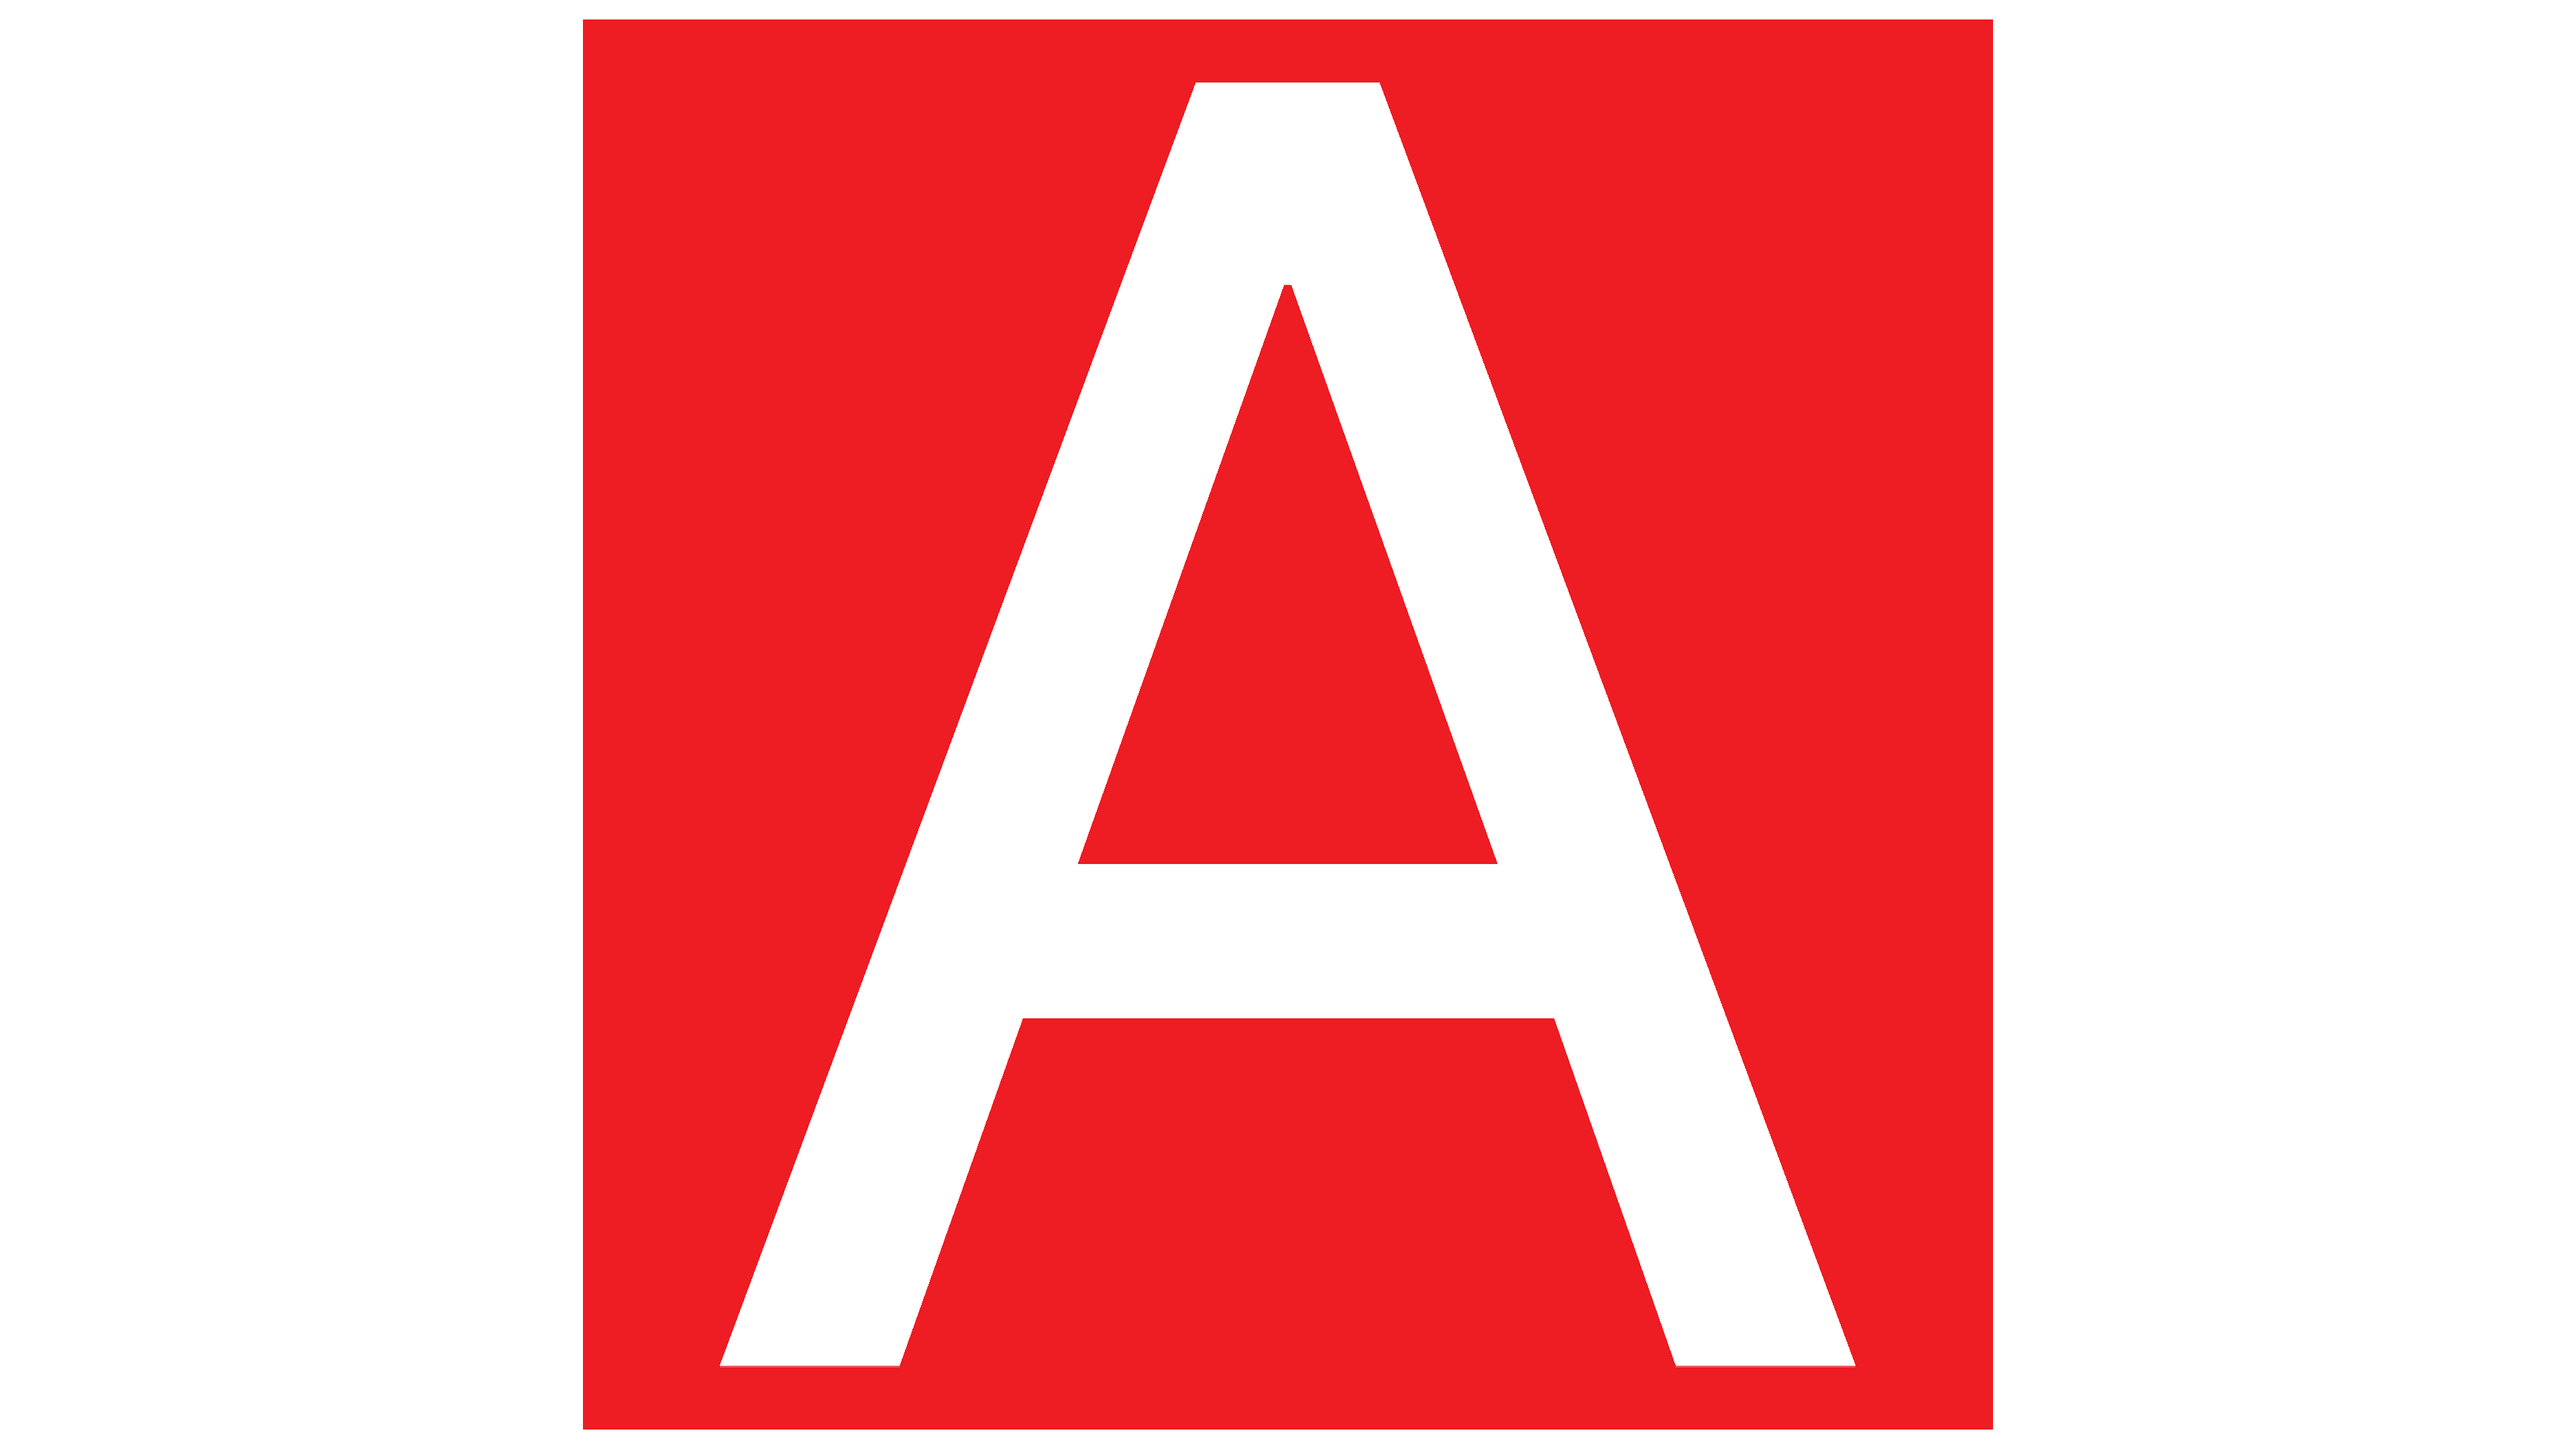 Alphabet, Inc.